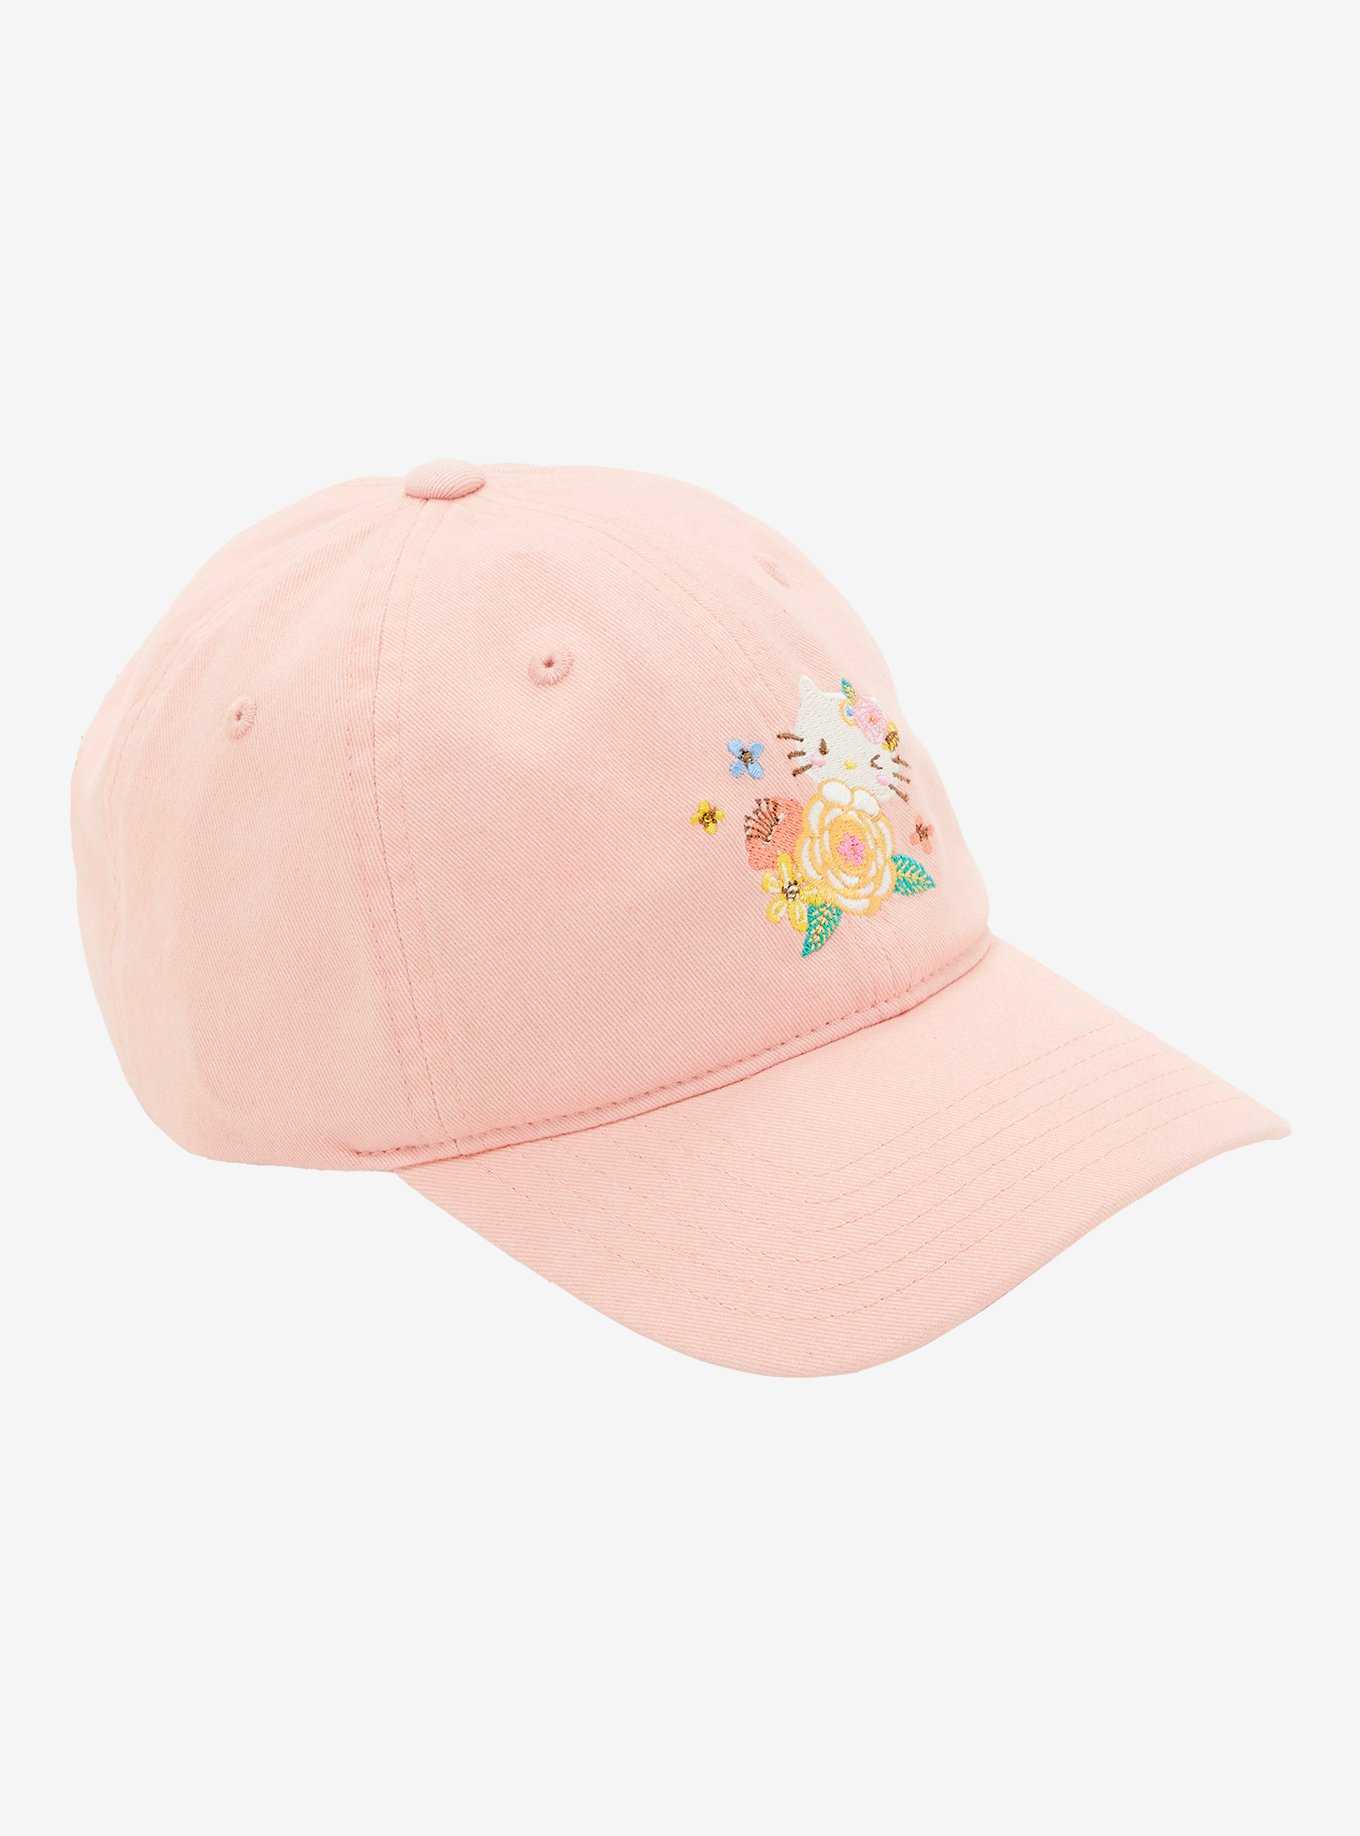 Sanrio Hello Kitty Floral Pink Ball Cap - BoxLunch Exclusive, , hi-res